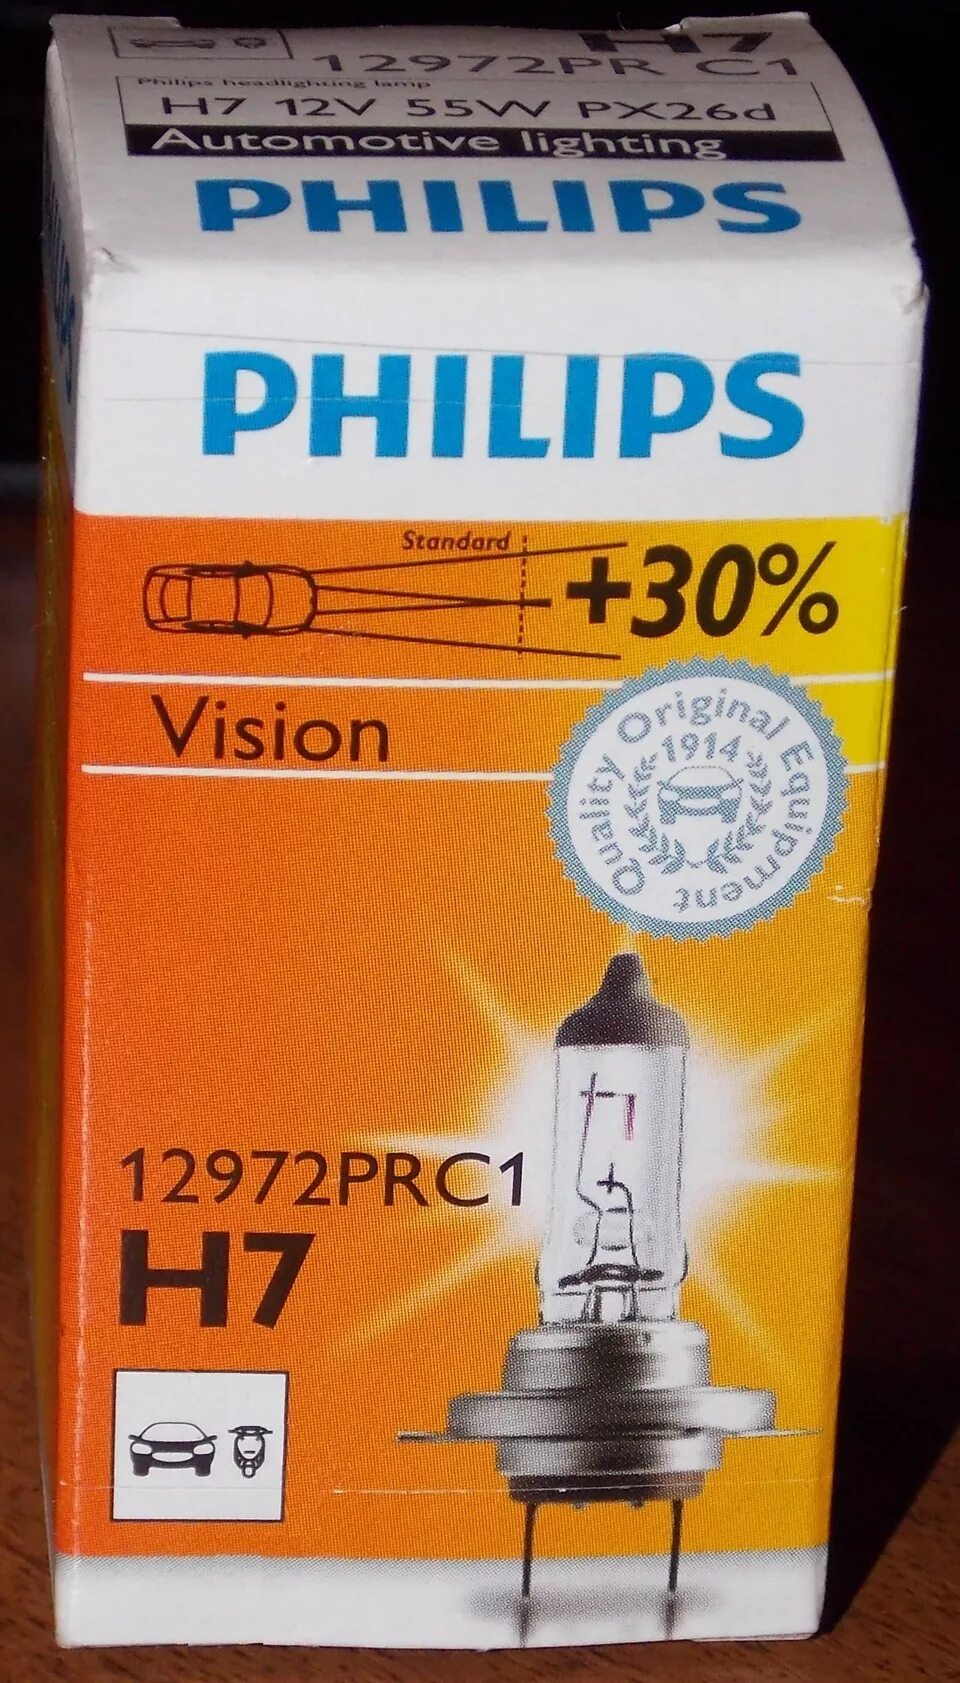 Лампы филипс ближний свет. Лампа ближнего света н7 Филипс. 12972prc1 Philips h7. Лампочки Philips 12972prc1. Филипс +30 h7.